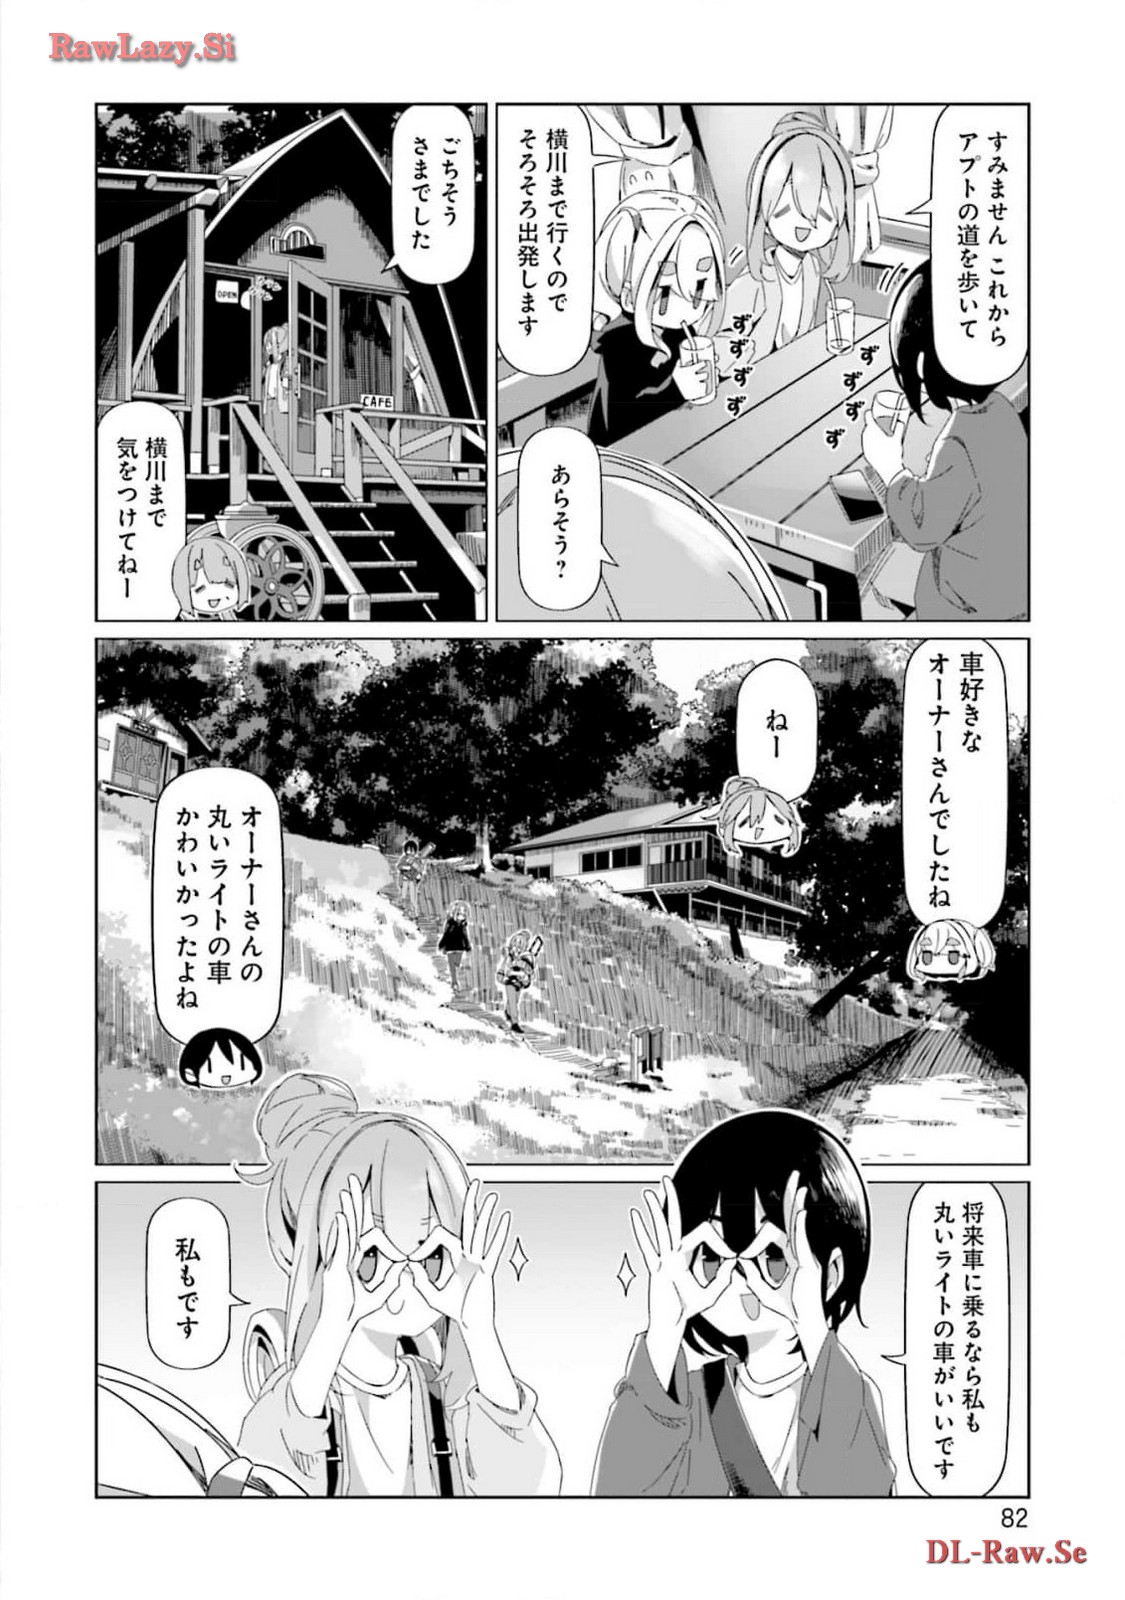 Yuru Camp - Chapter 91 - Page 2